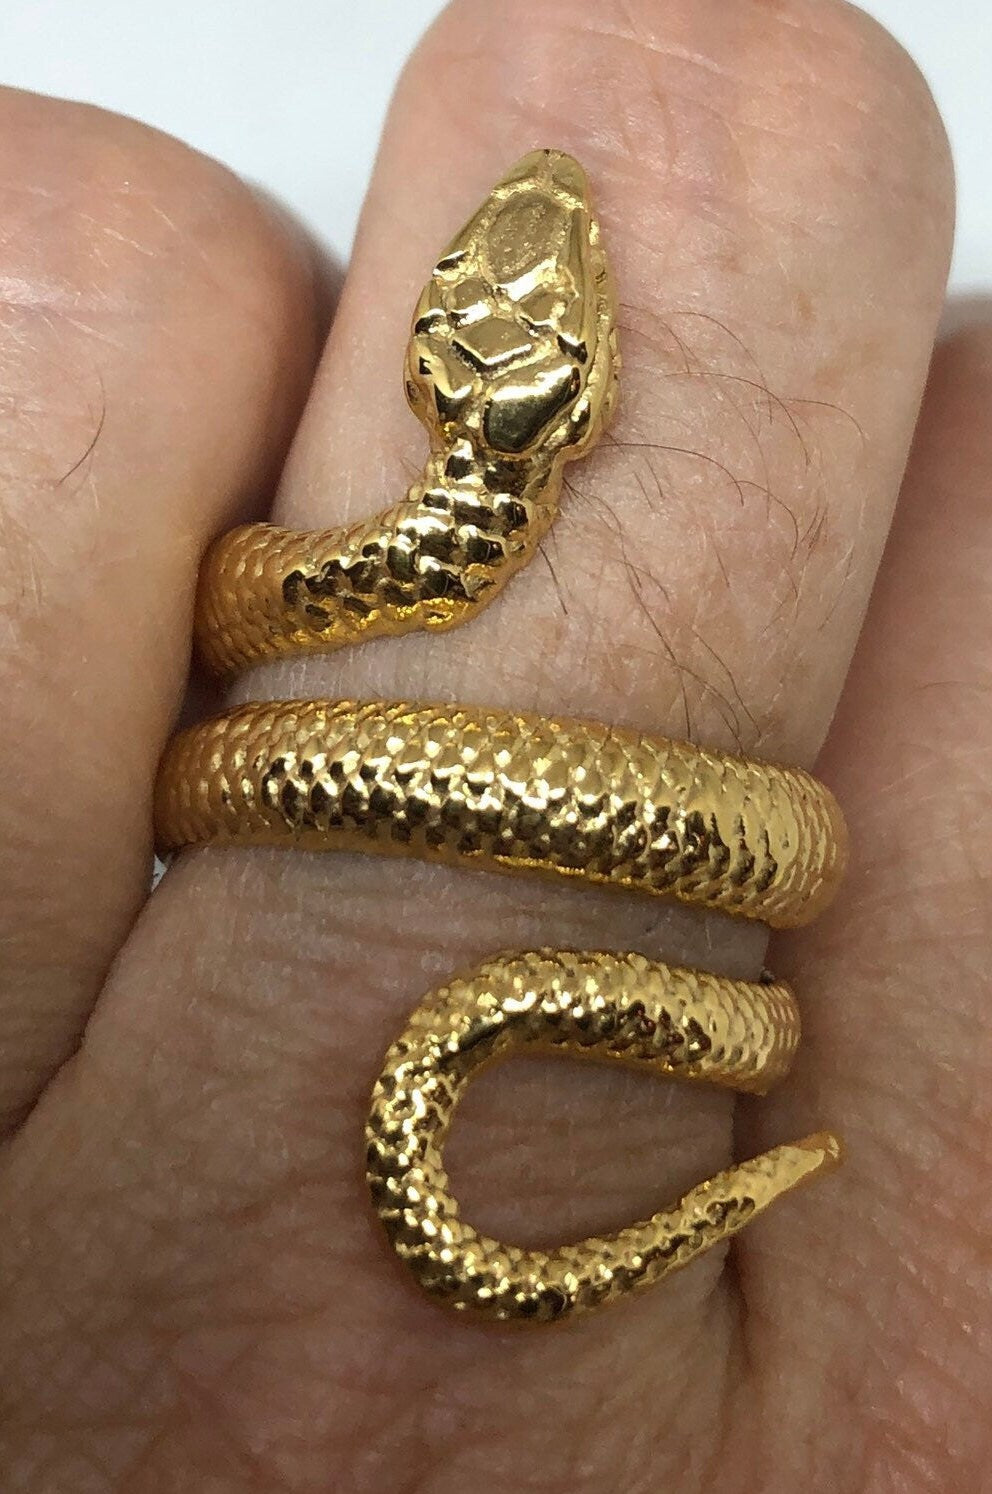 18k Gold Finish Stainless Steel Snake Ring on hand